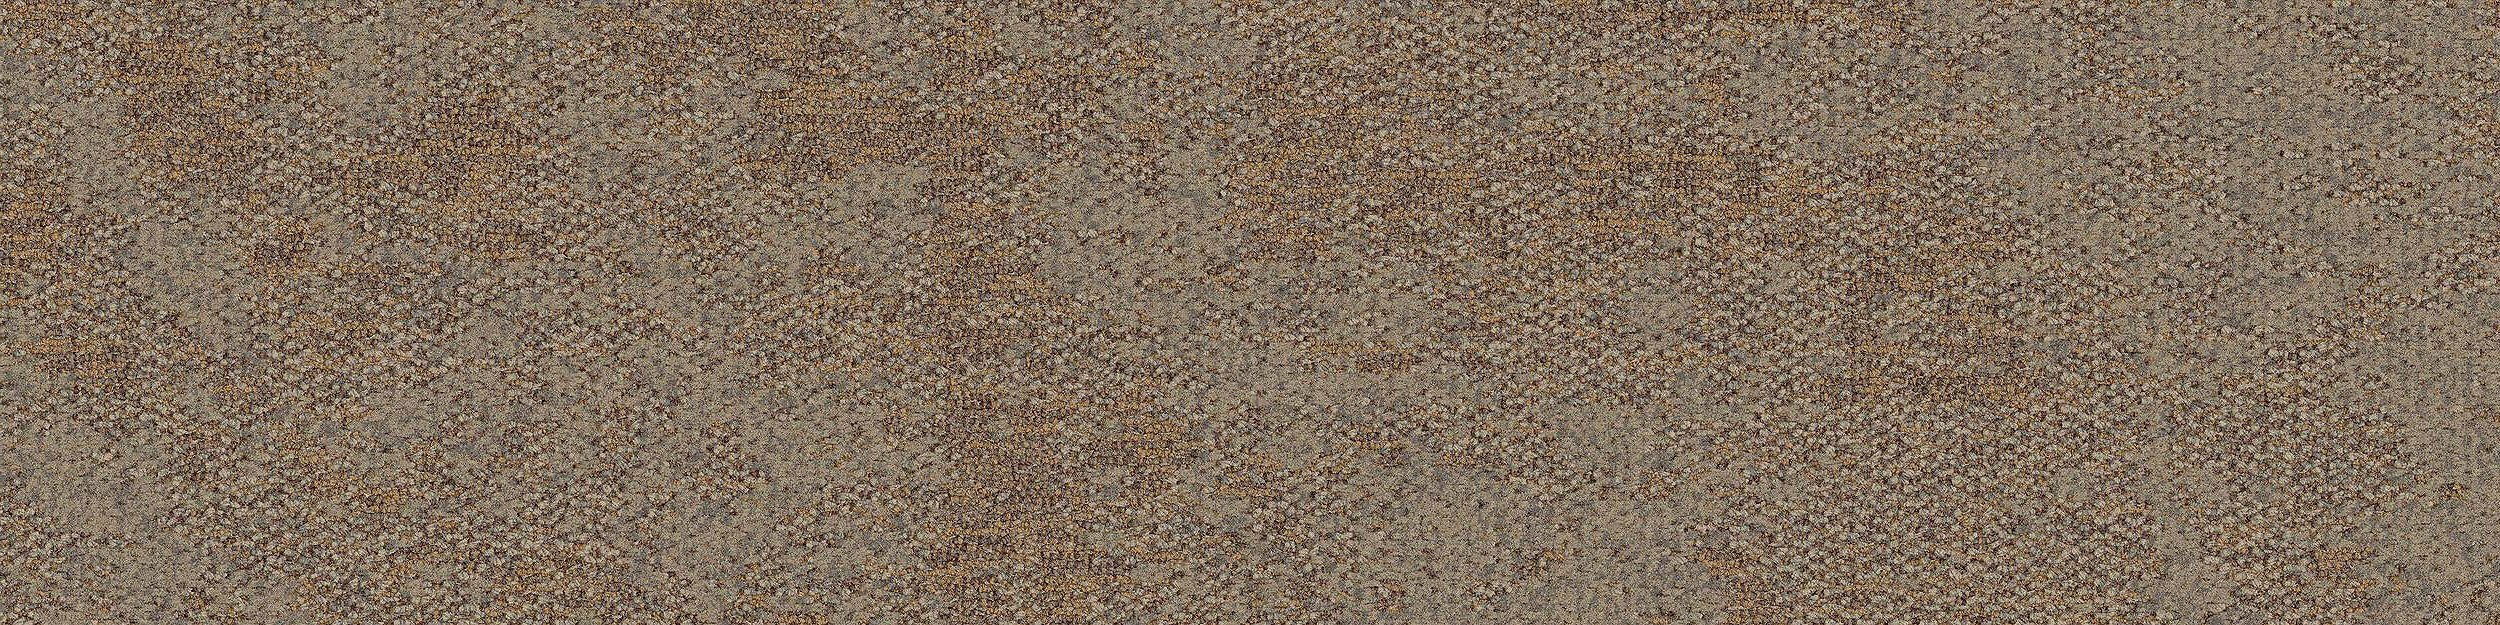 Nimbus Carpet Tile In Desert image number 7